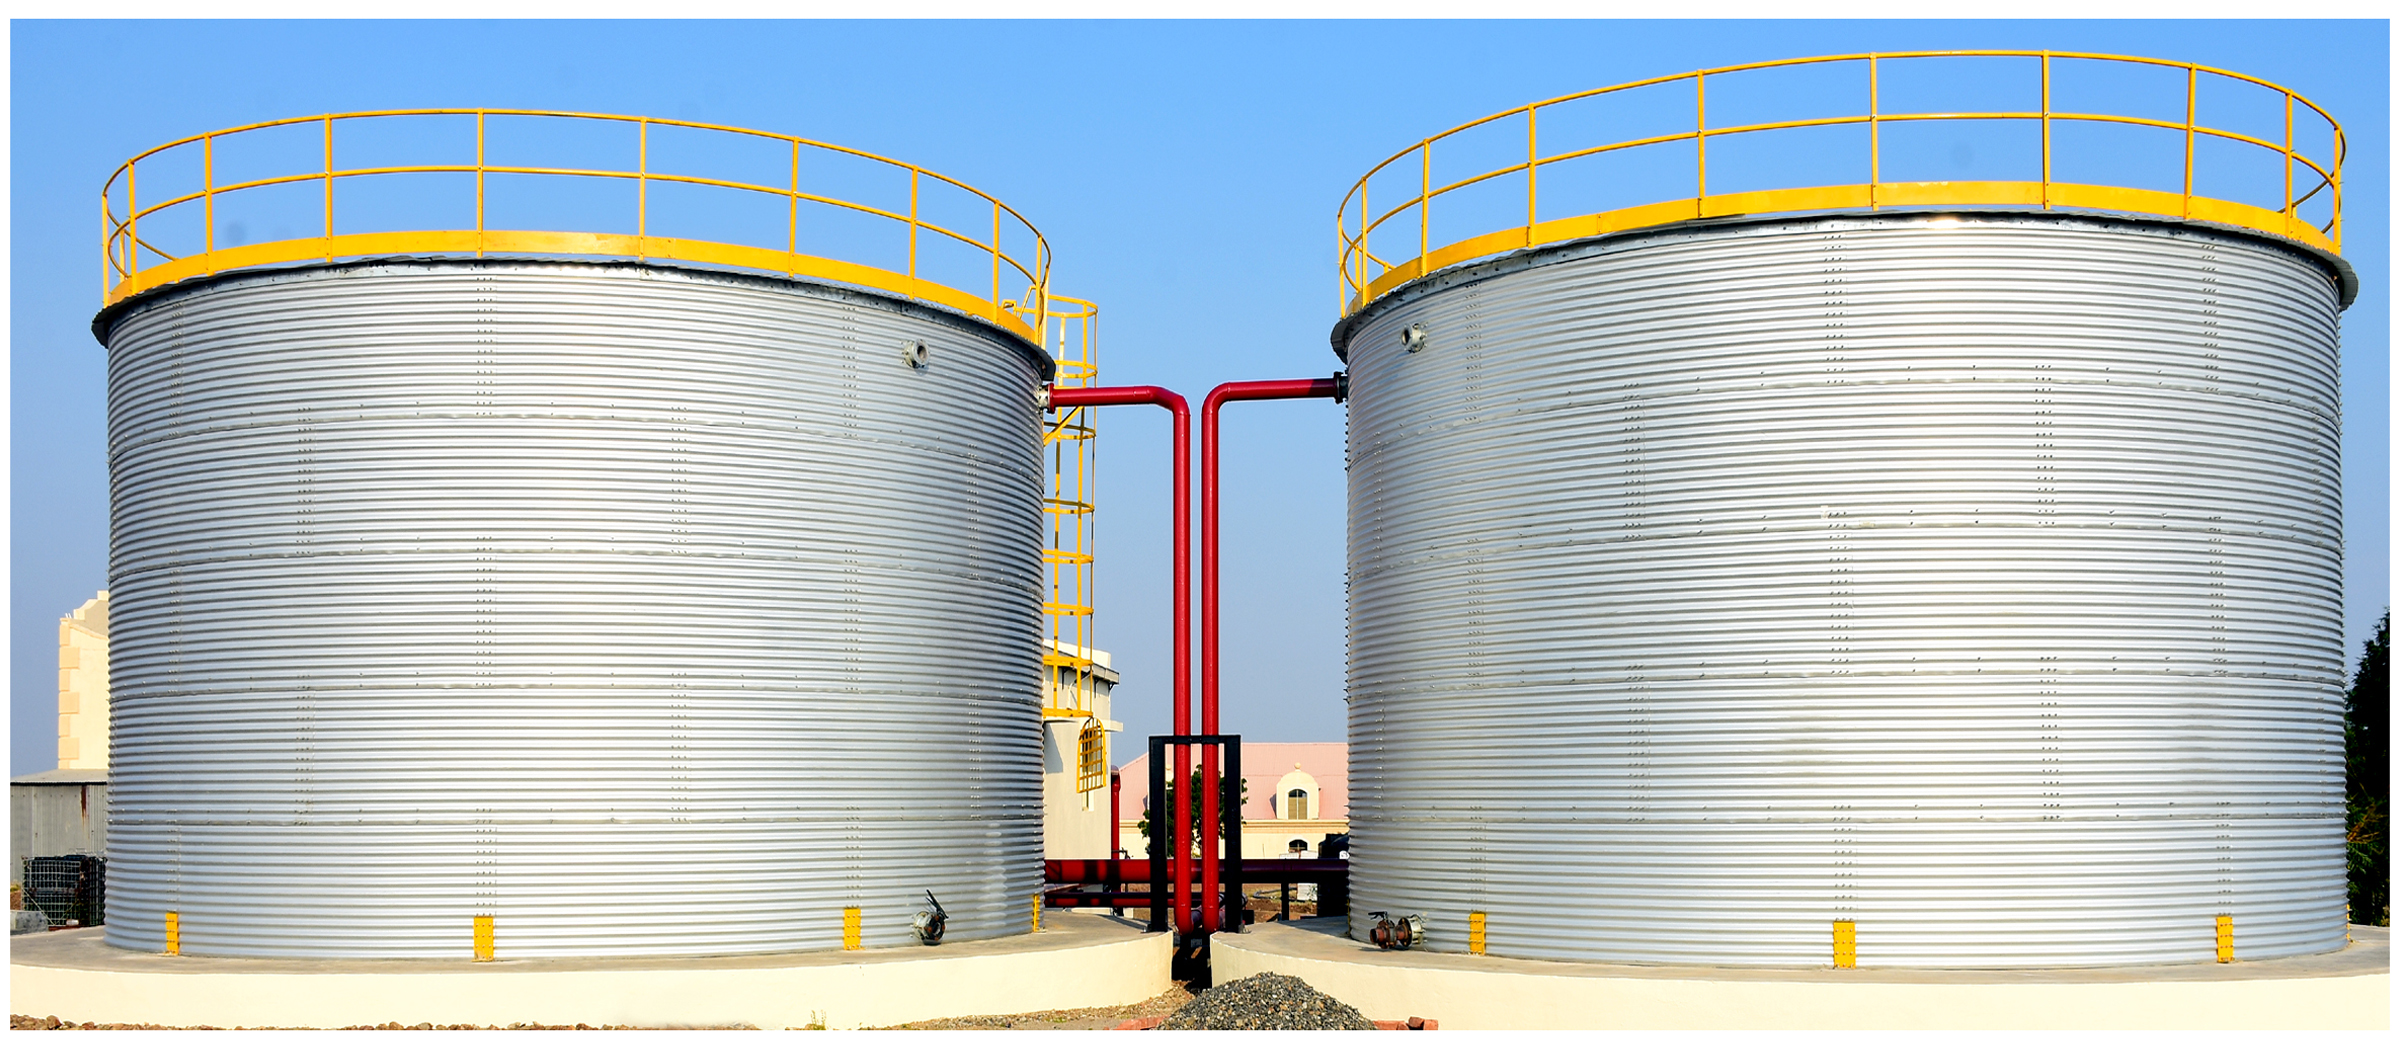 Water Storage Tanks from Ben & Gaws Pvt Ltd